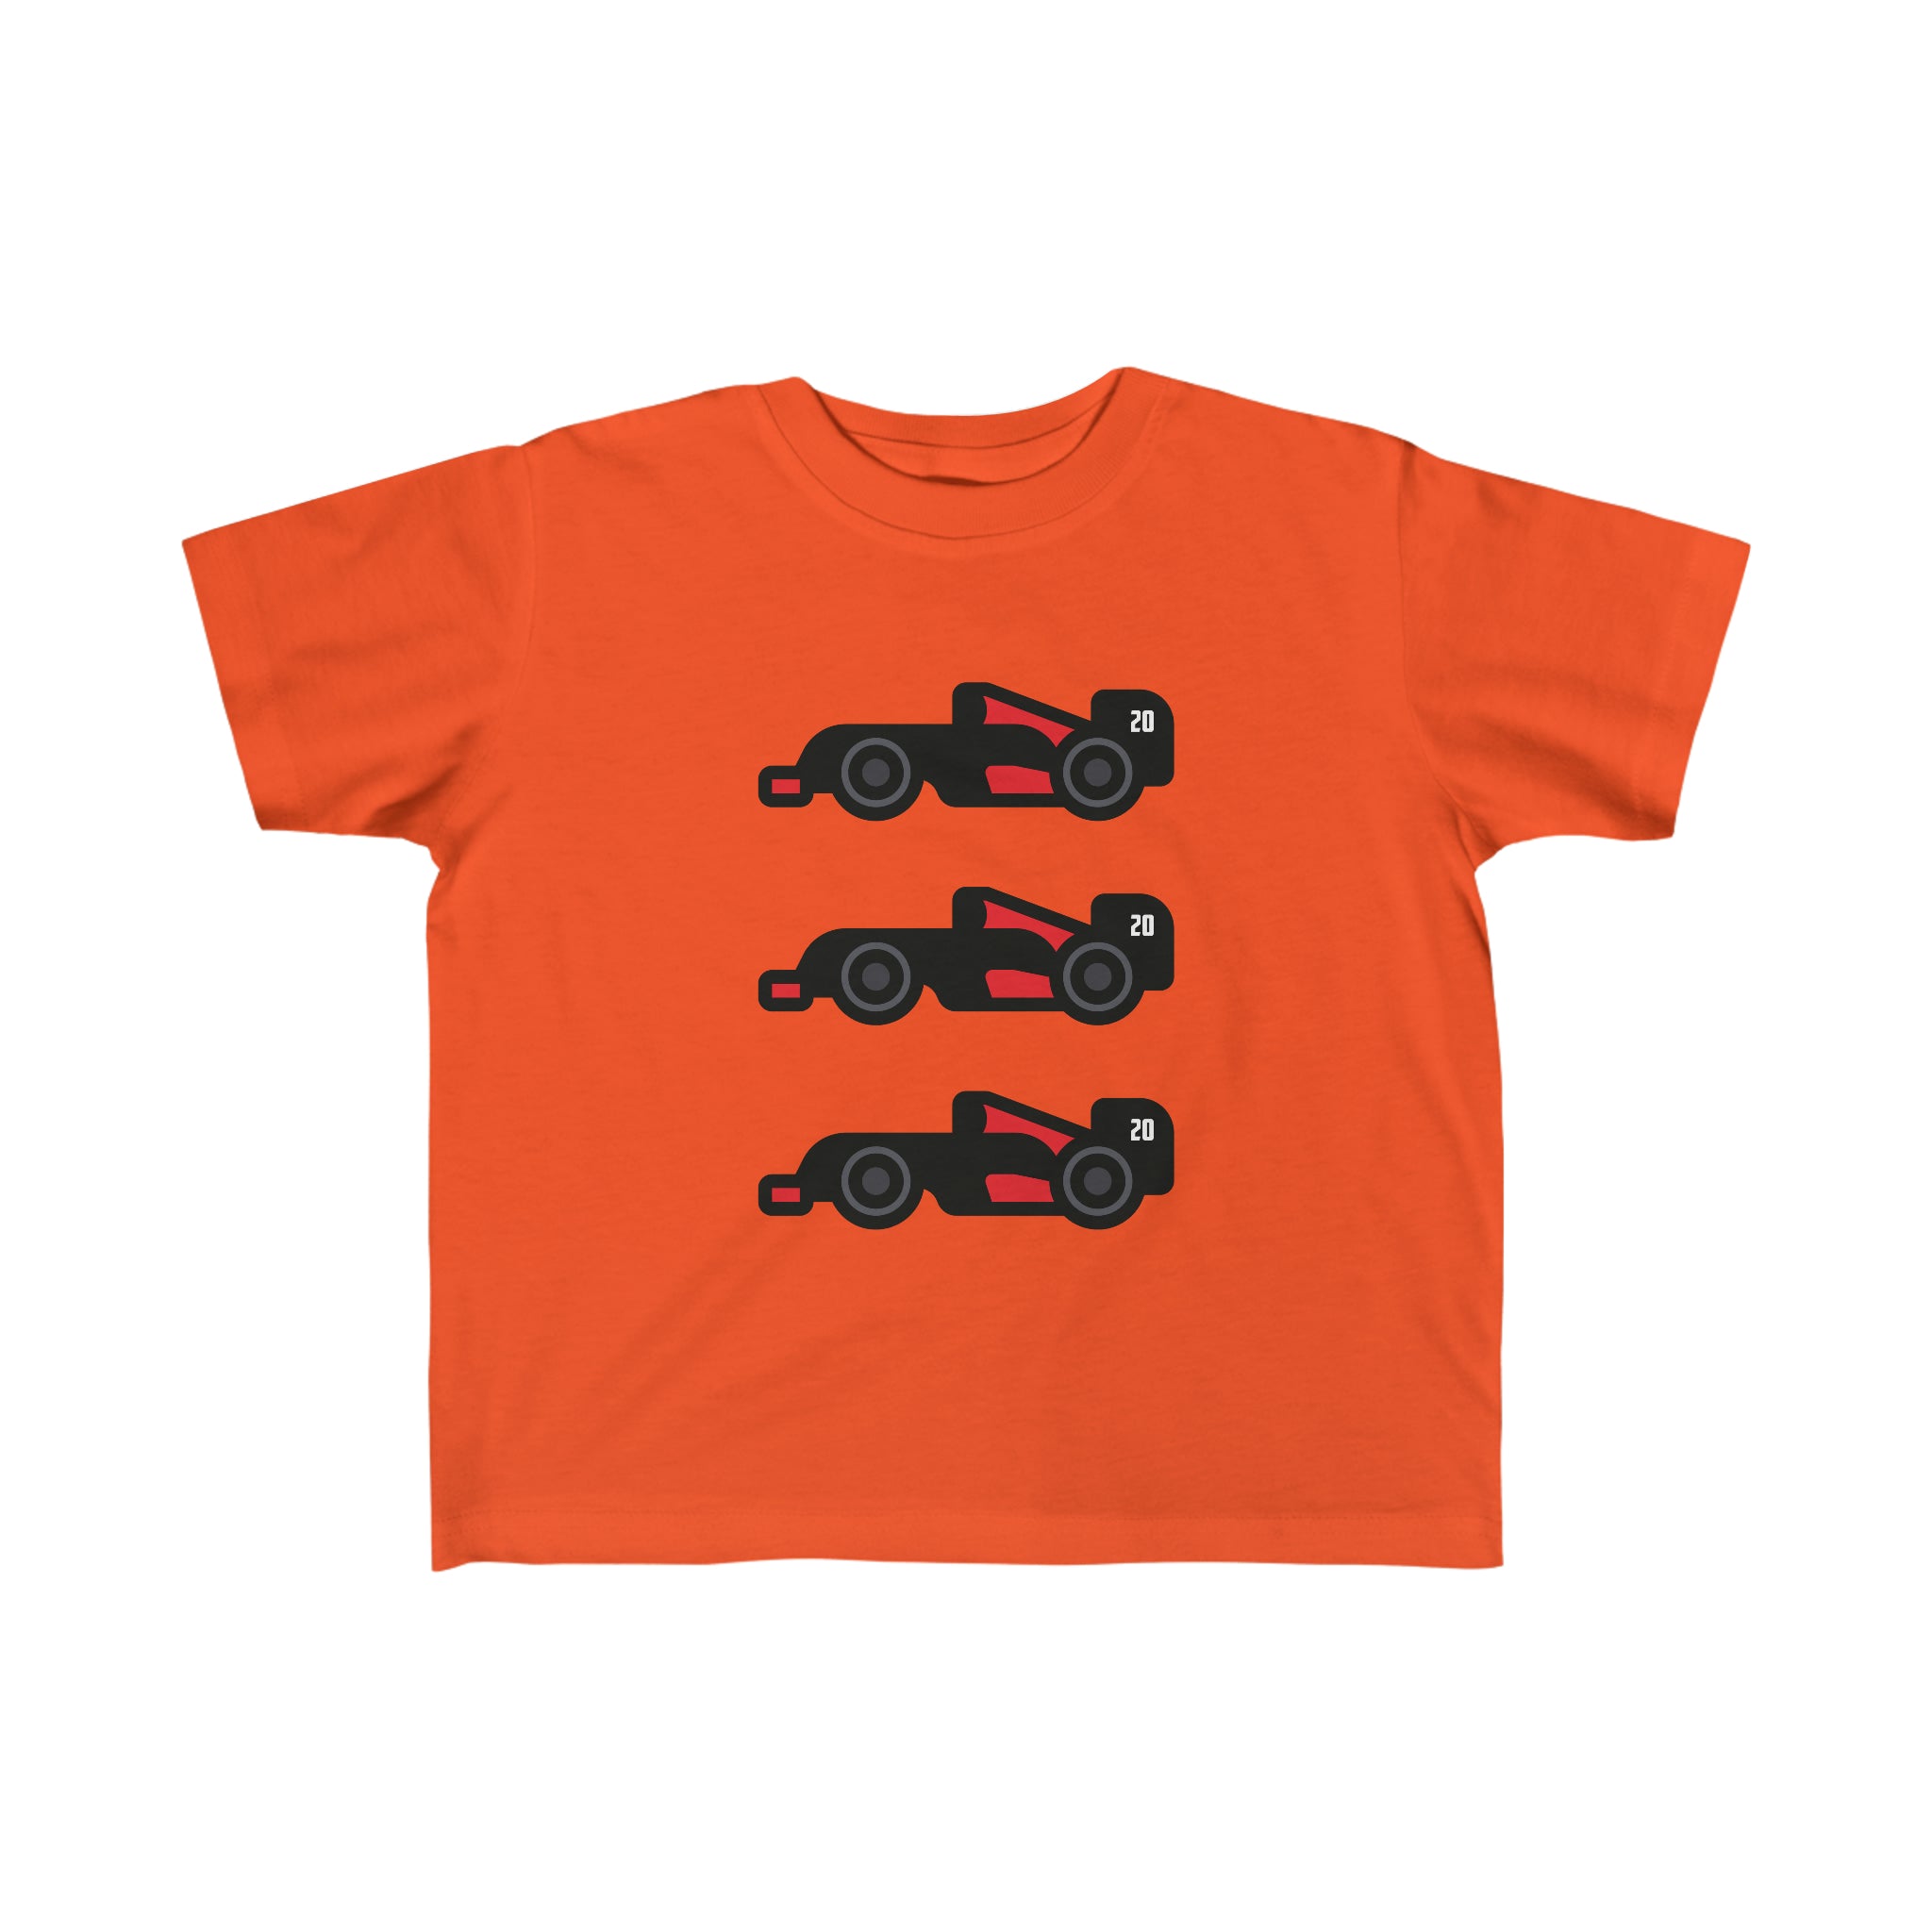 MAG "20" Toddler T-shirt - FormulaFanatics